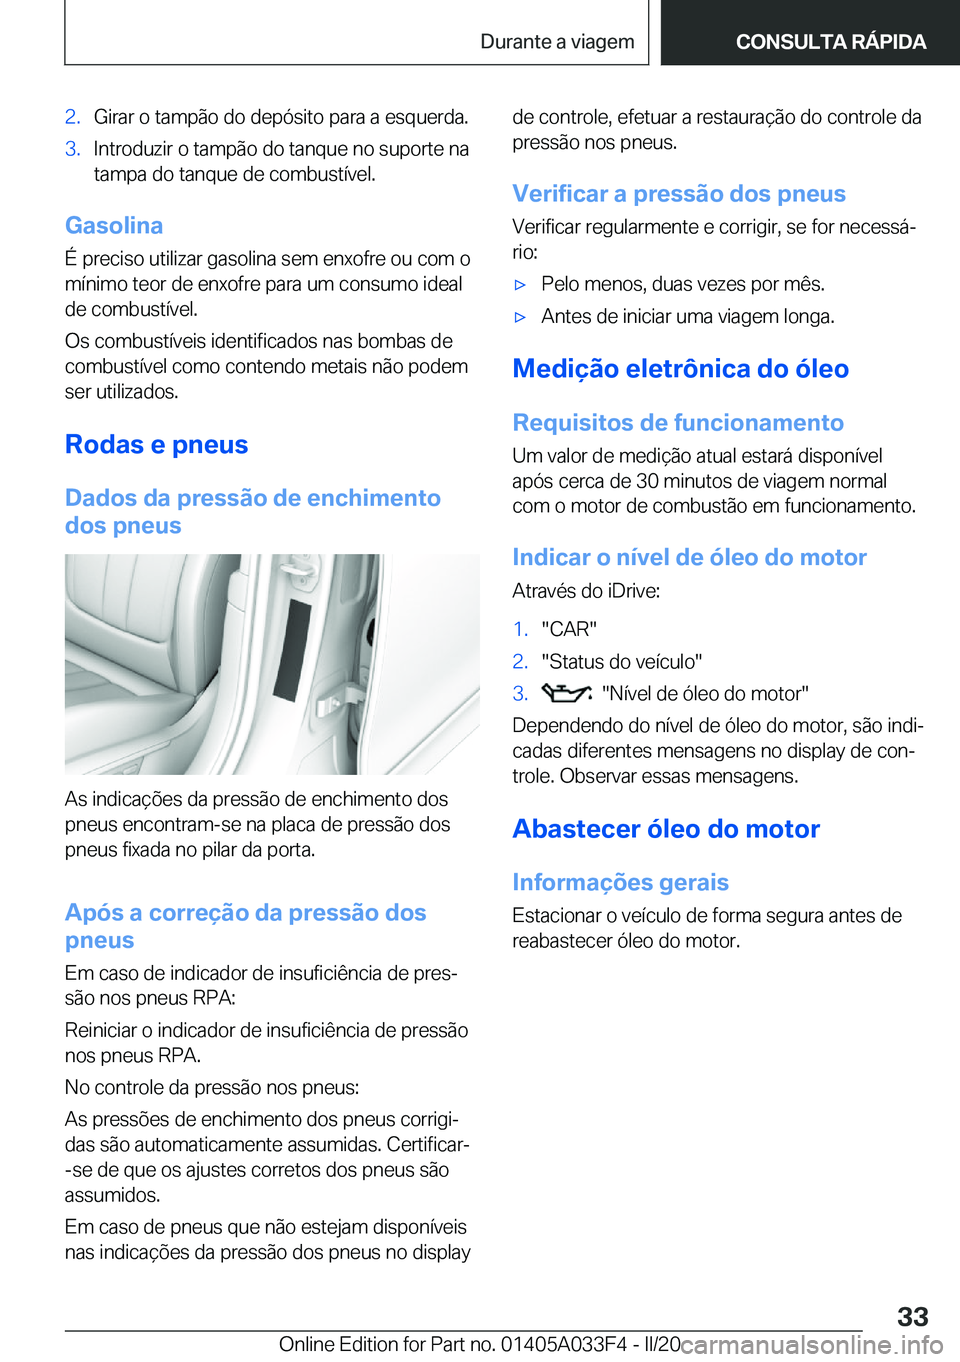 BMW X5 M 2020  Manual do condutor (in Portuguese) �2�.�G�i�r�a�r��o��t�a�m�p�ã�o��d�o��d�e�p�ó�s�i�t�o��p�a�r�a��a��e�s�q�u�e�r�d�a�.�3�.�I�n�t�r�o�d�u�z�i�r��o��t�a�m�p�ã�o��d�o��t�a�n�q�u�e��n�o��s�u�p�o�r�t�e��n�a�t�a�m�p�a��d�o�